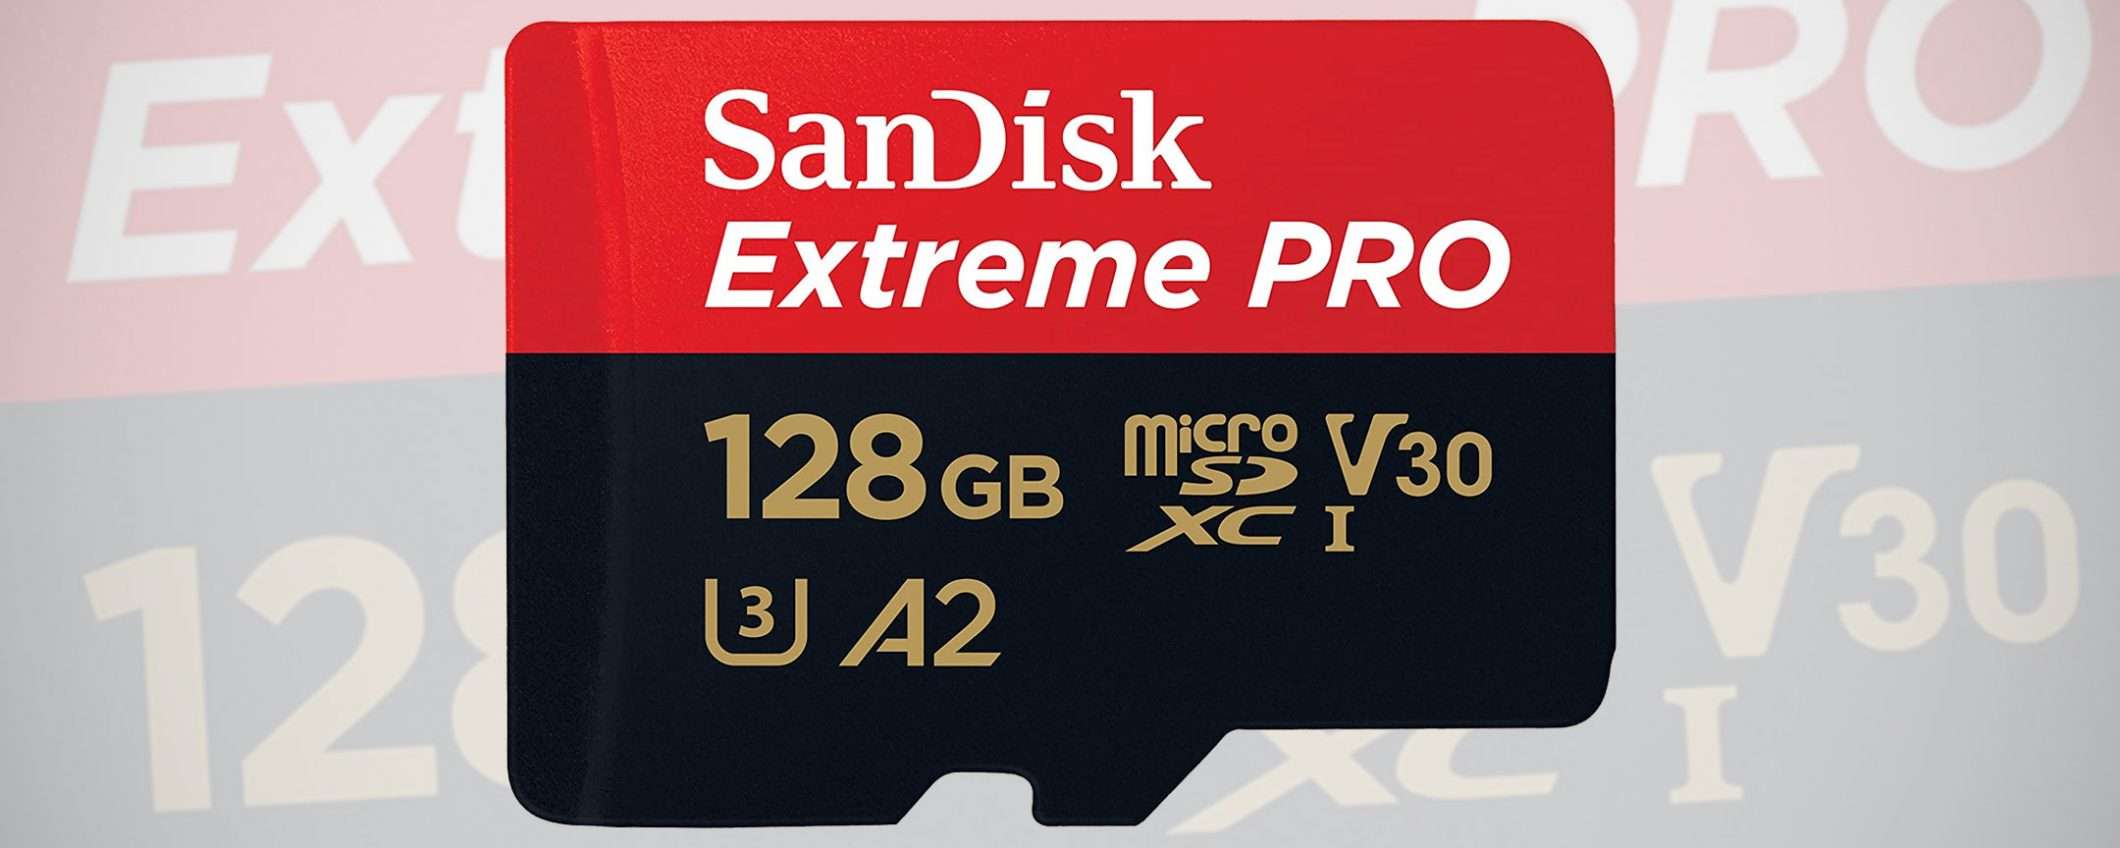 microSD SanDisk Extreme Pro in super offerta (-44%)